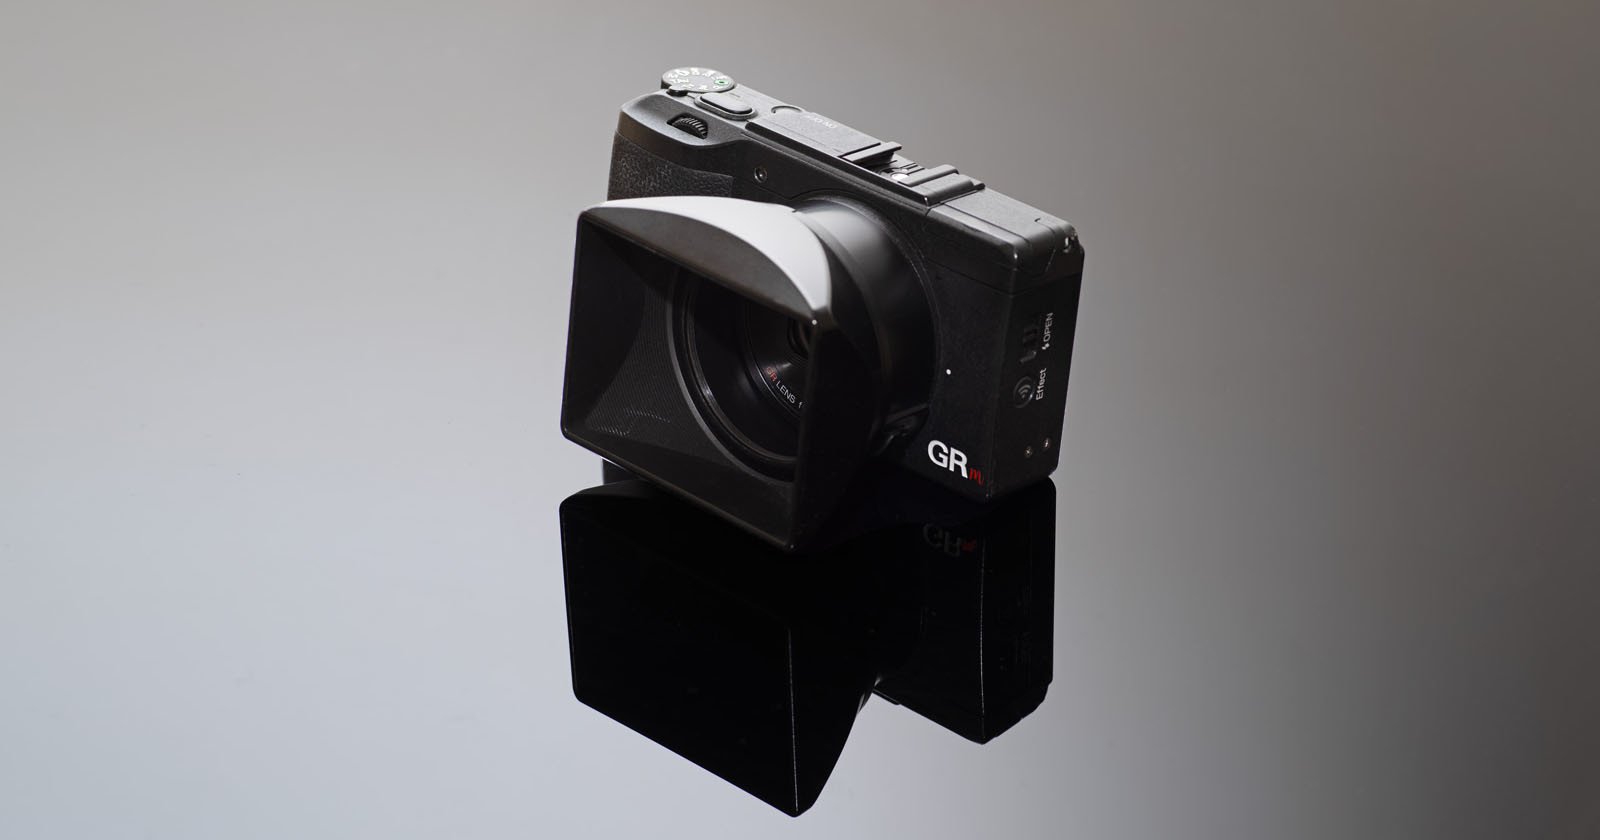  ricoh grm custom monochrom camera 